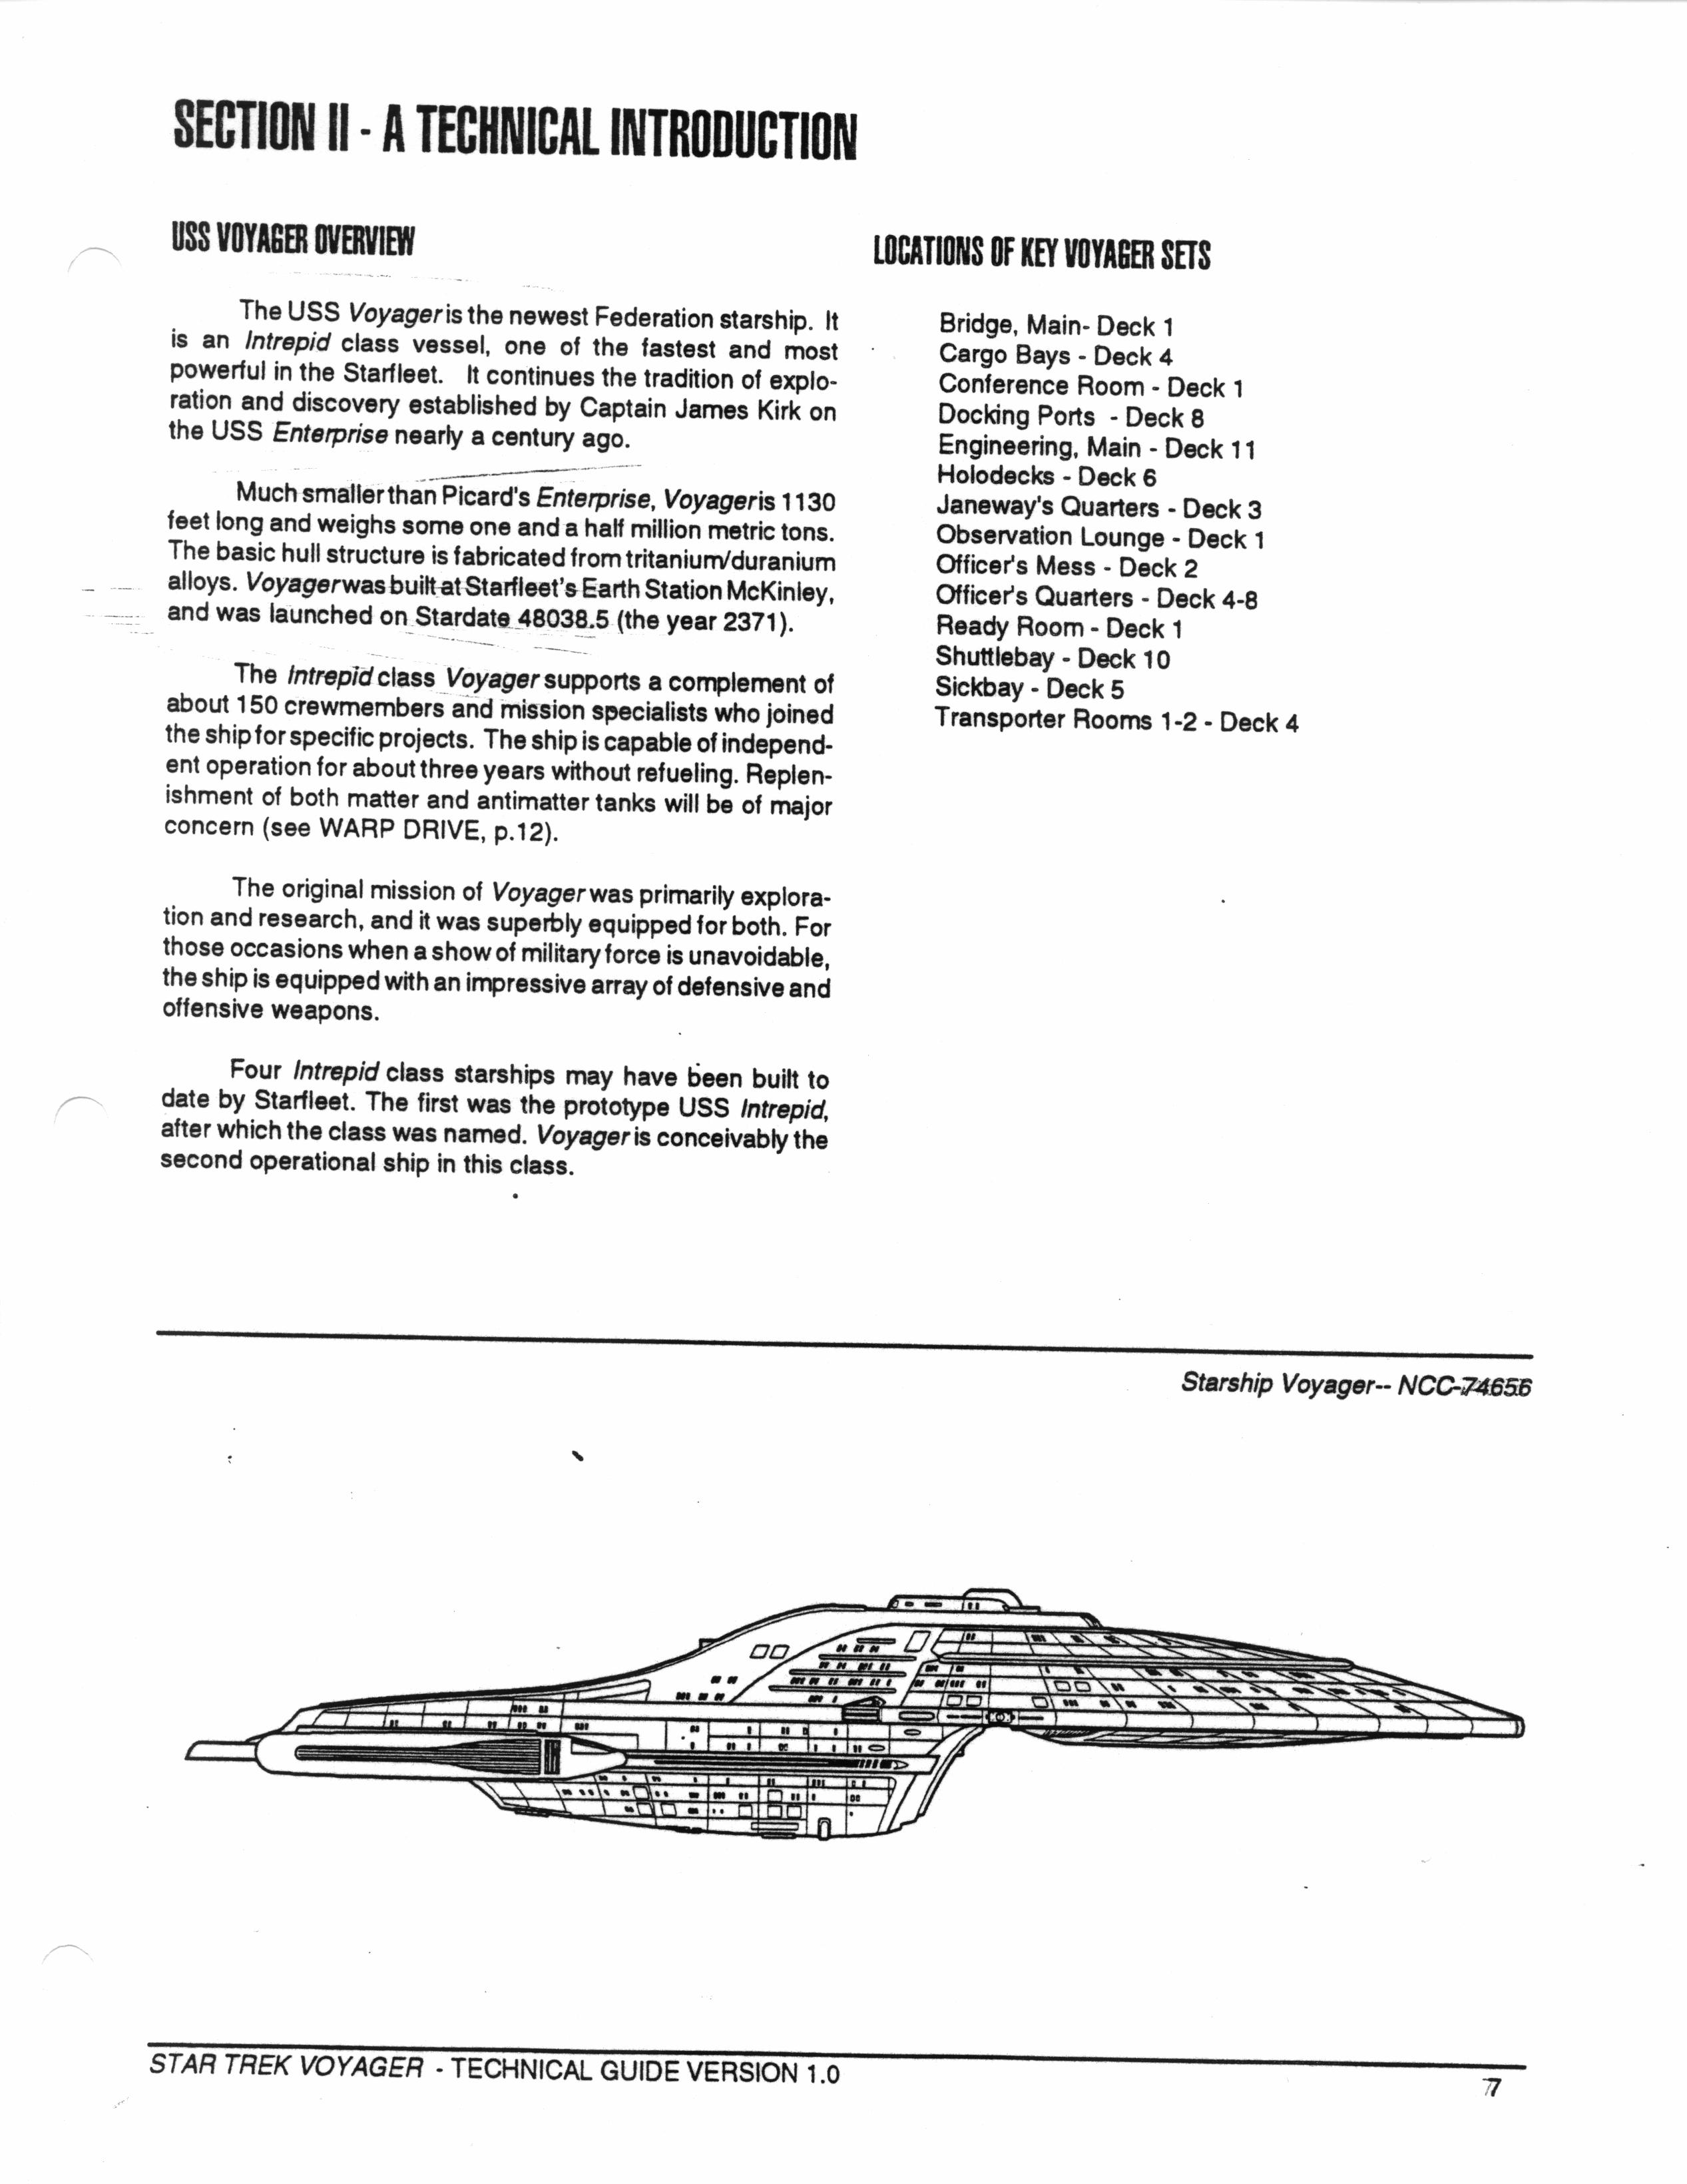 star trek voyager technical manual pdf